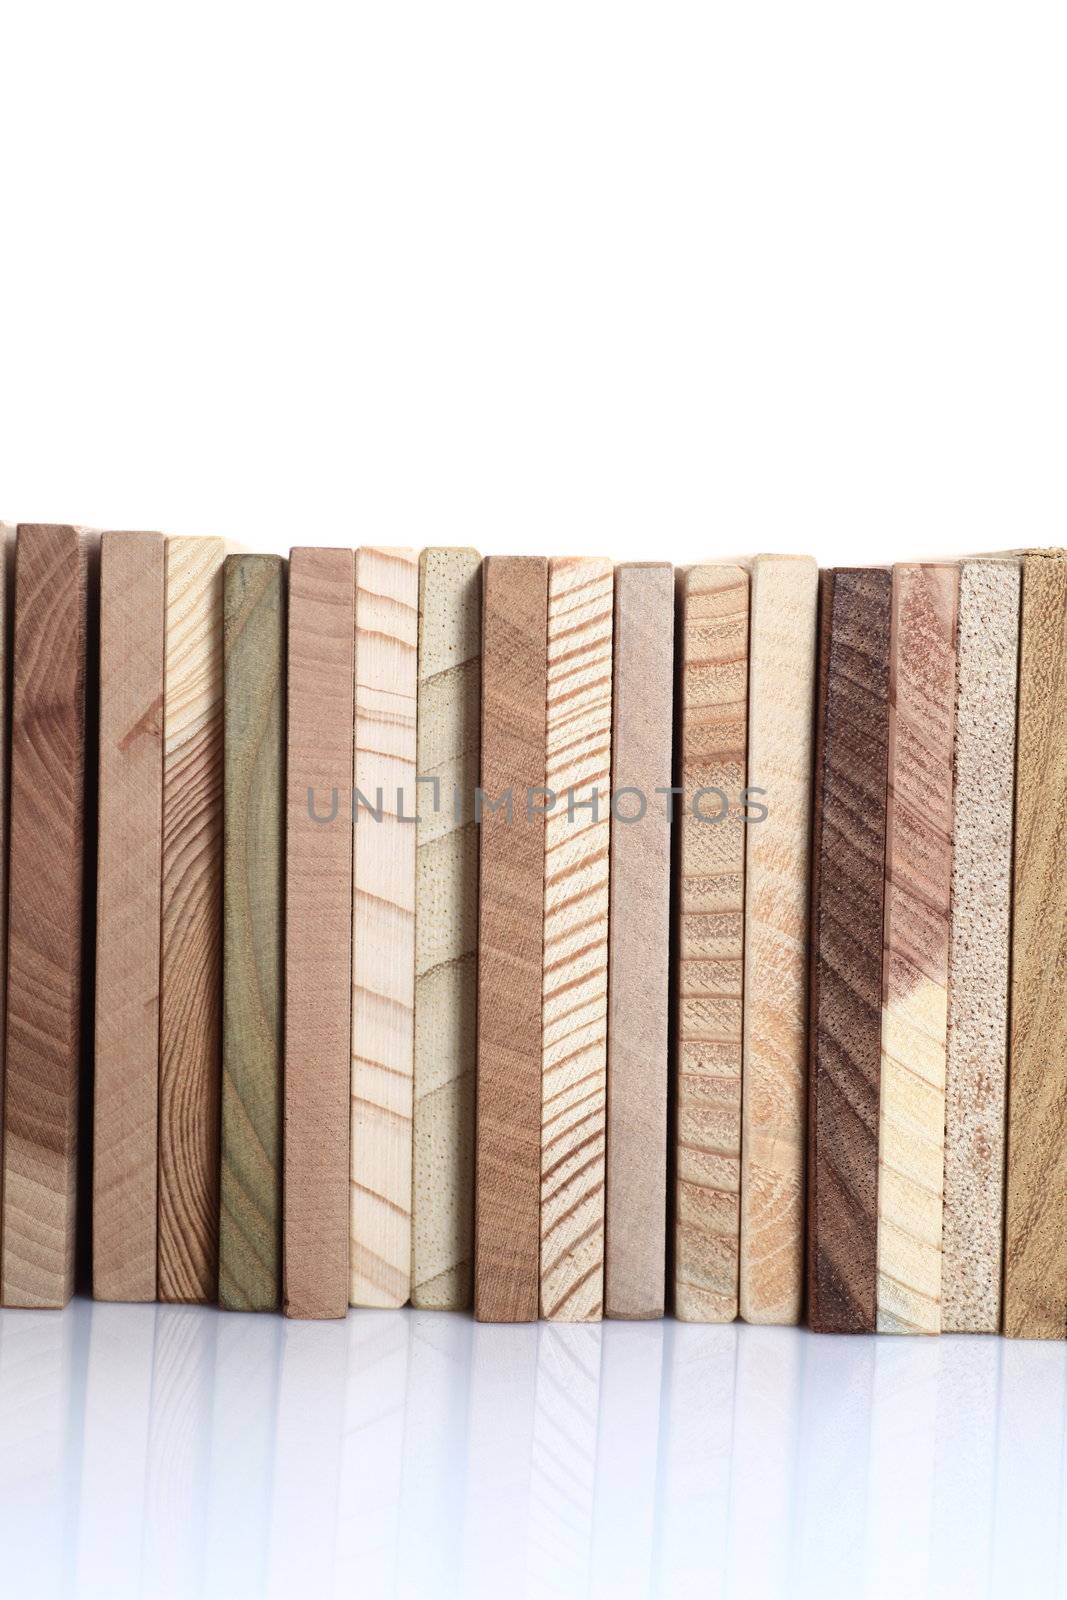 wooden boards